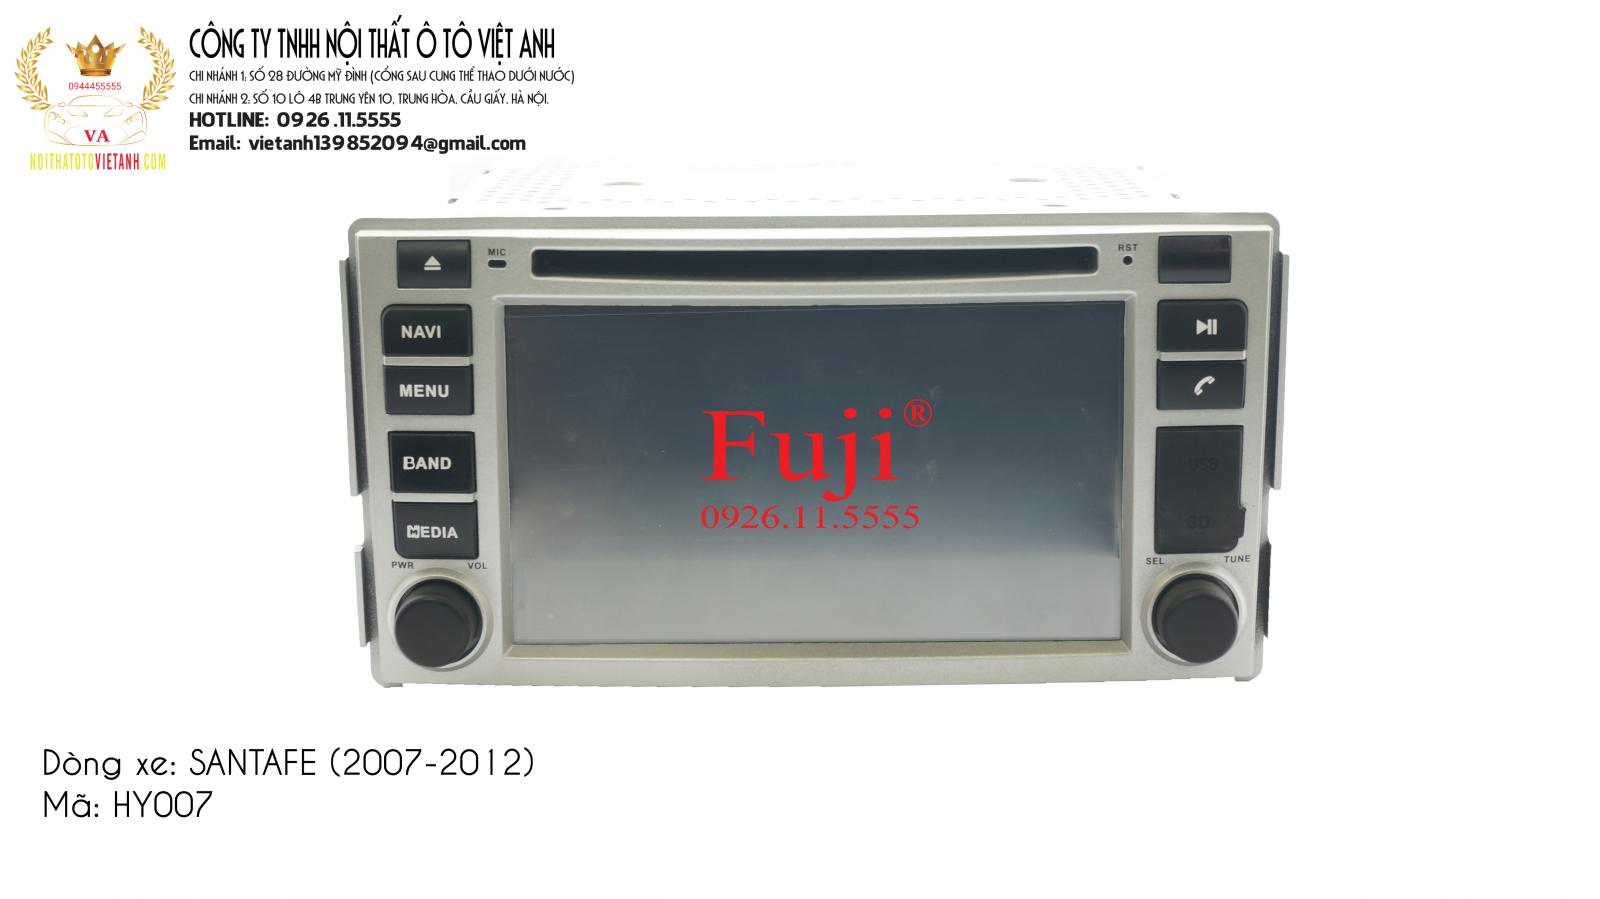 DVD FUJI THEO XE SANTAFE (2007 - 2012) 5.700.000₫